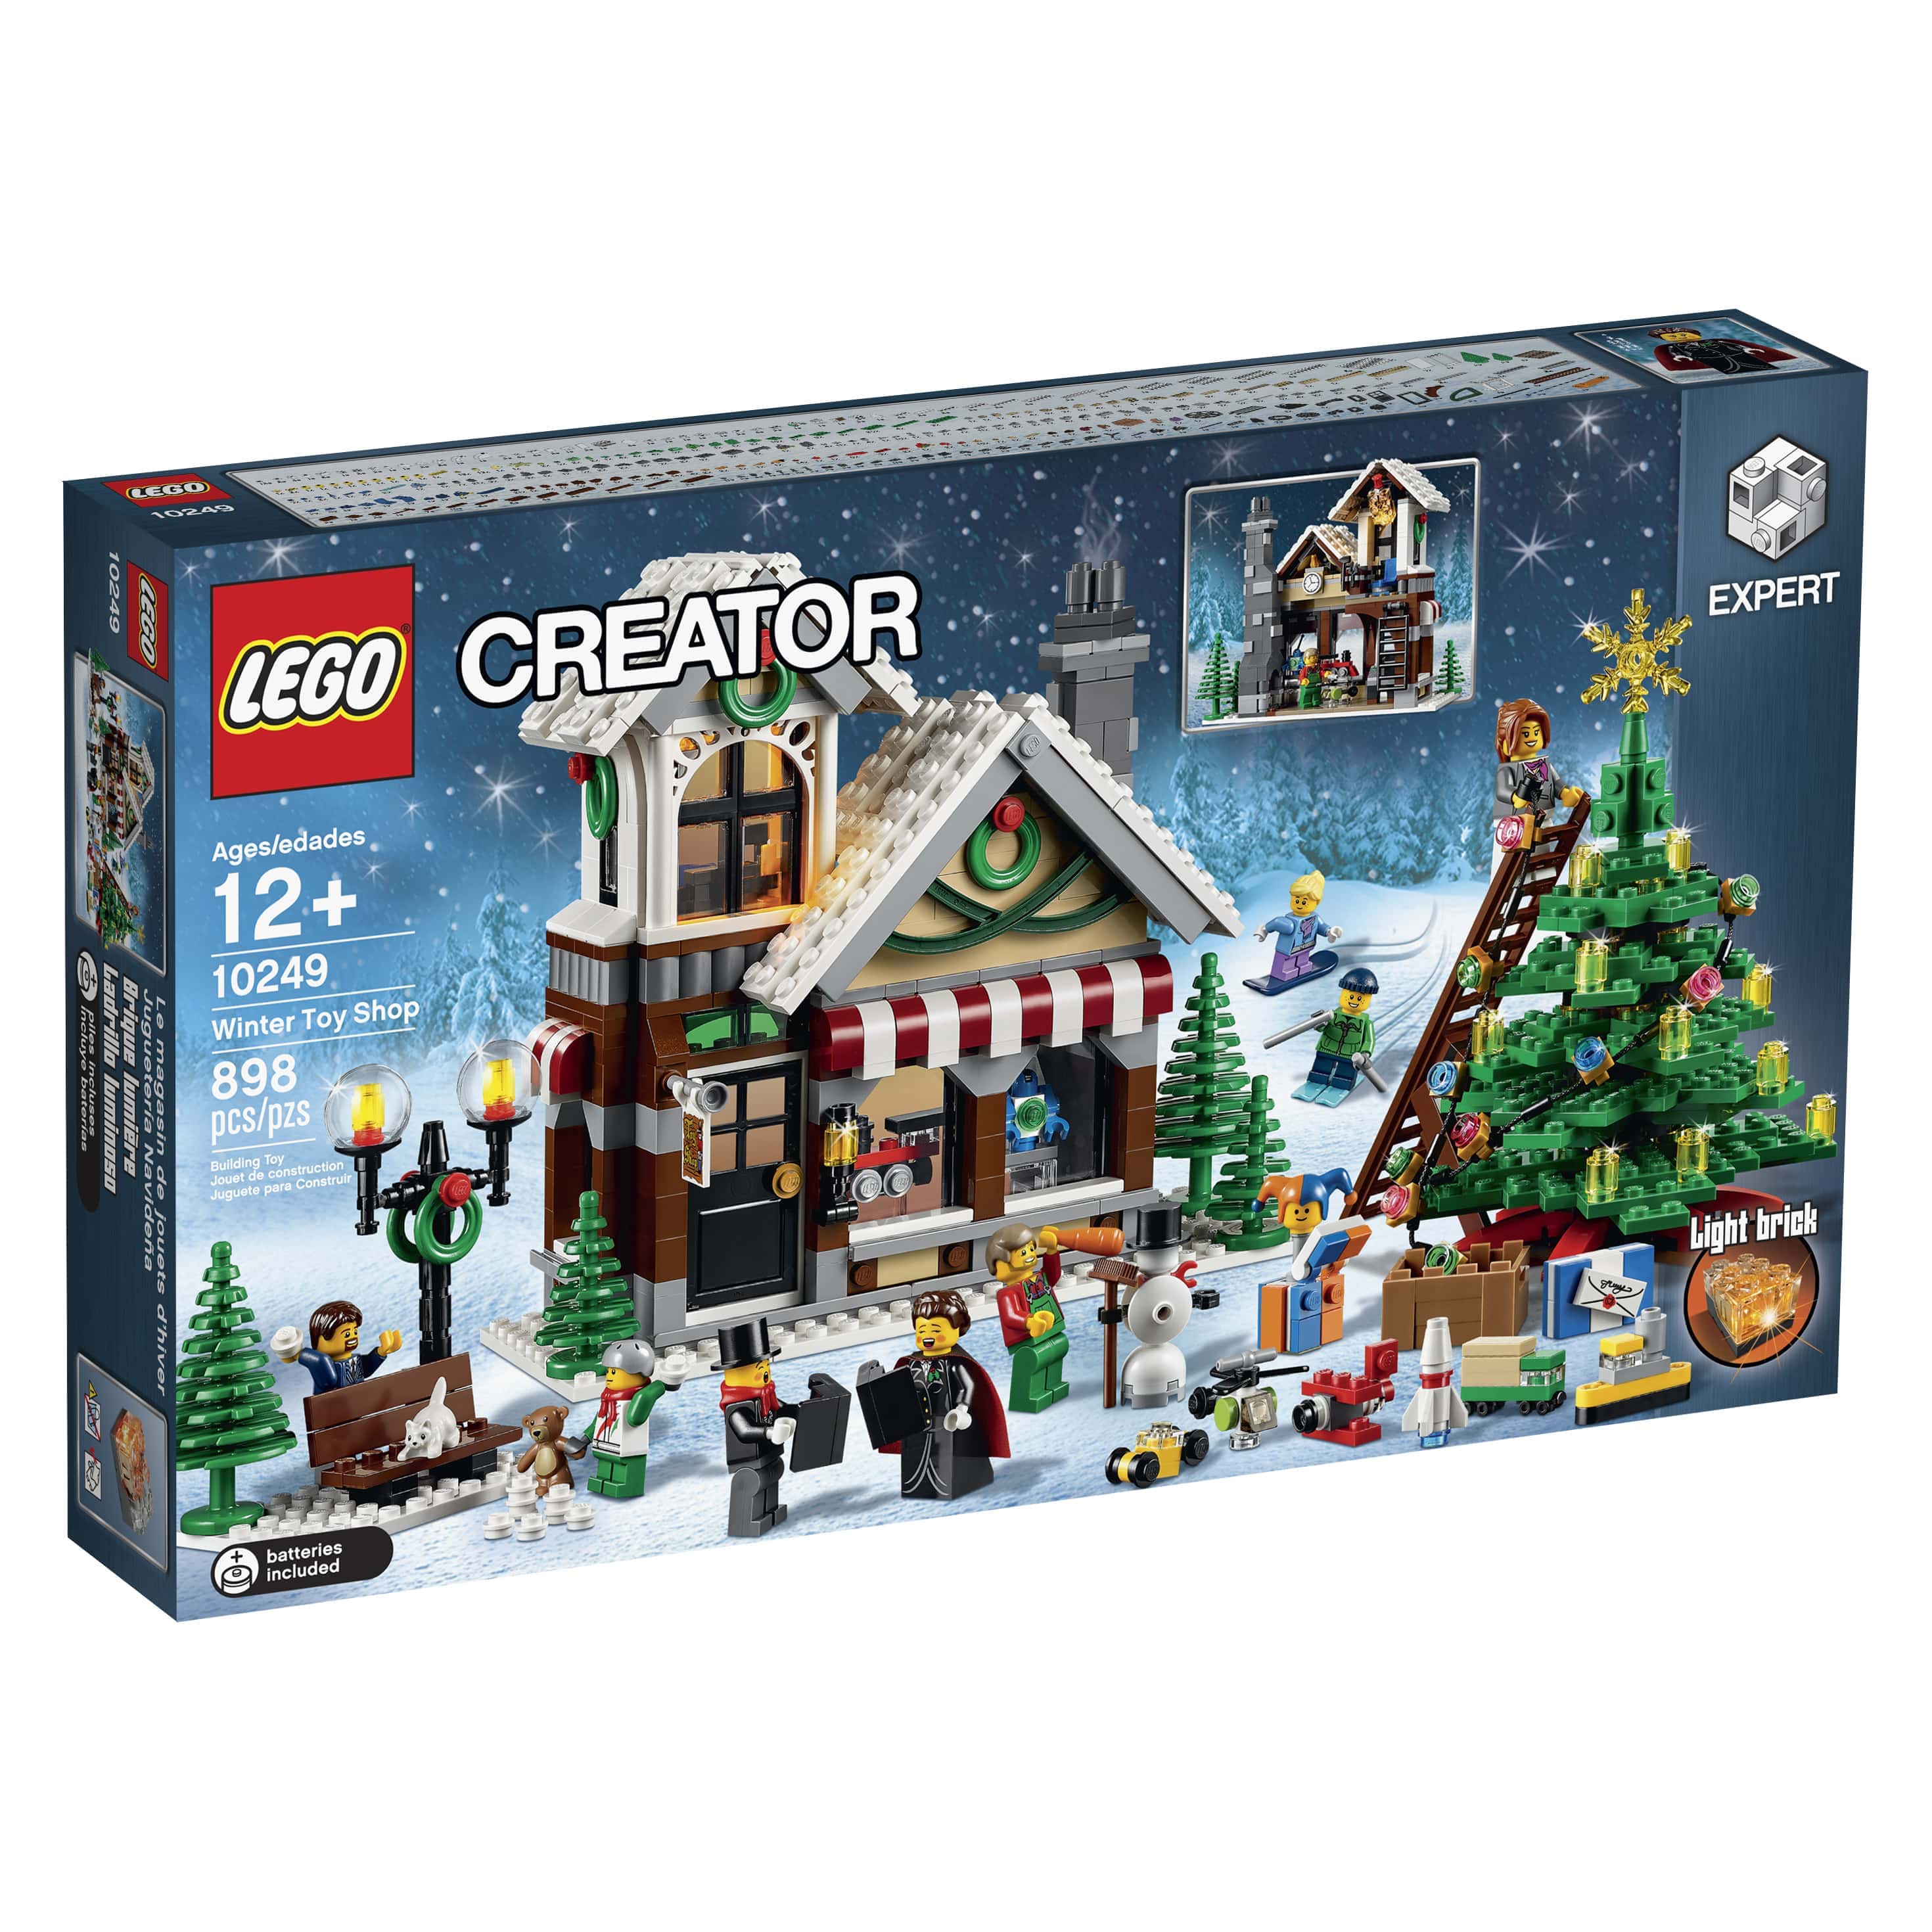 LEGO NEWS LEGO Creator Winter Village Winter Toy Shop (10249